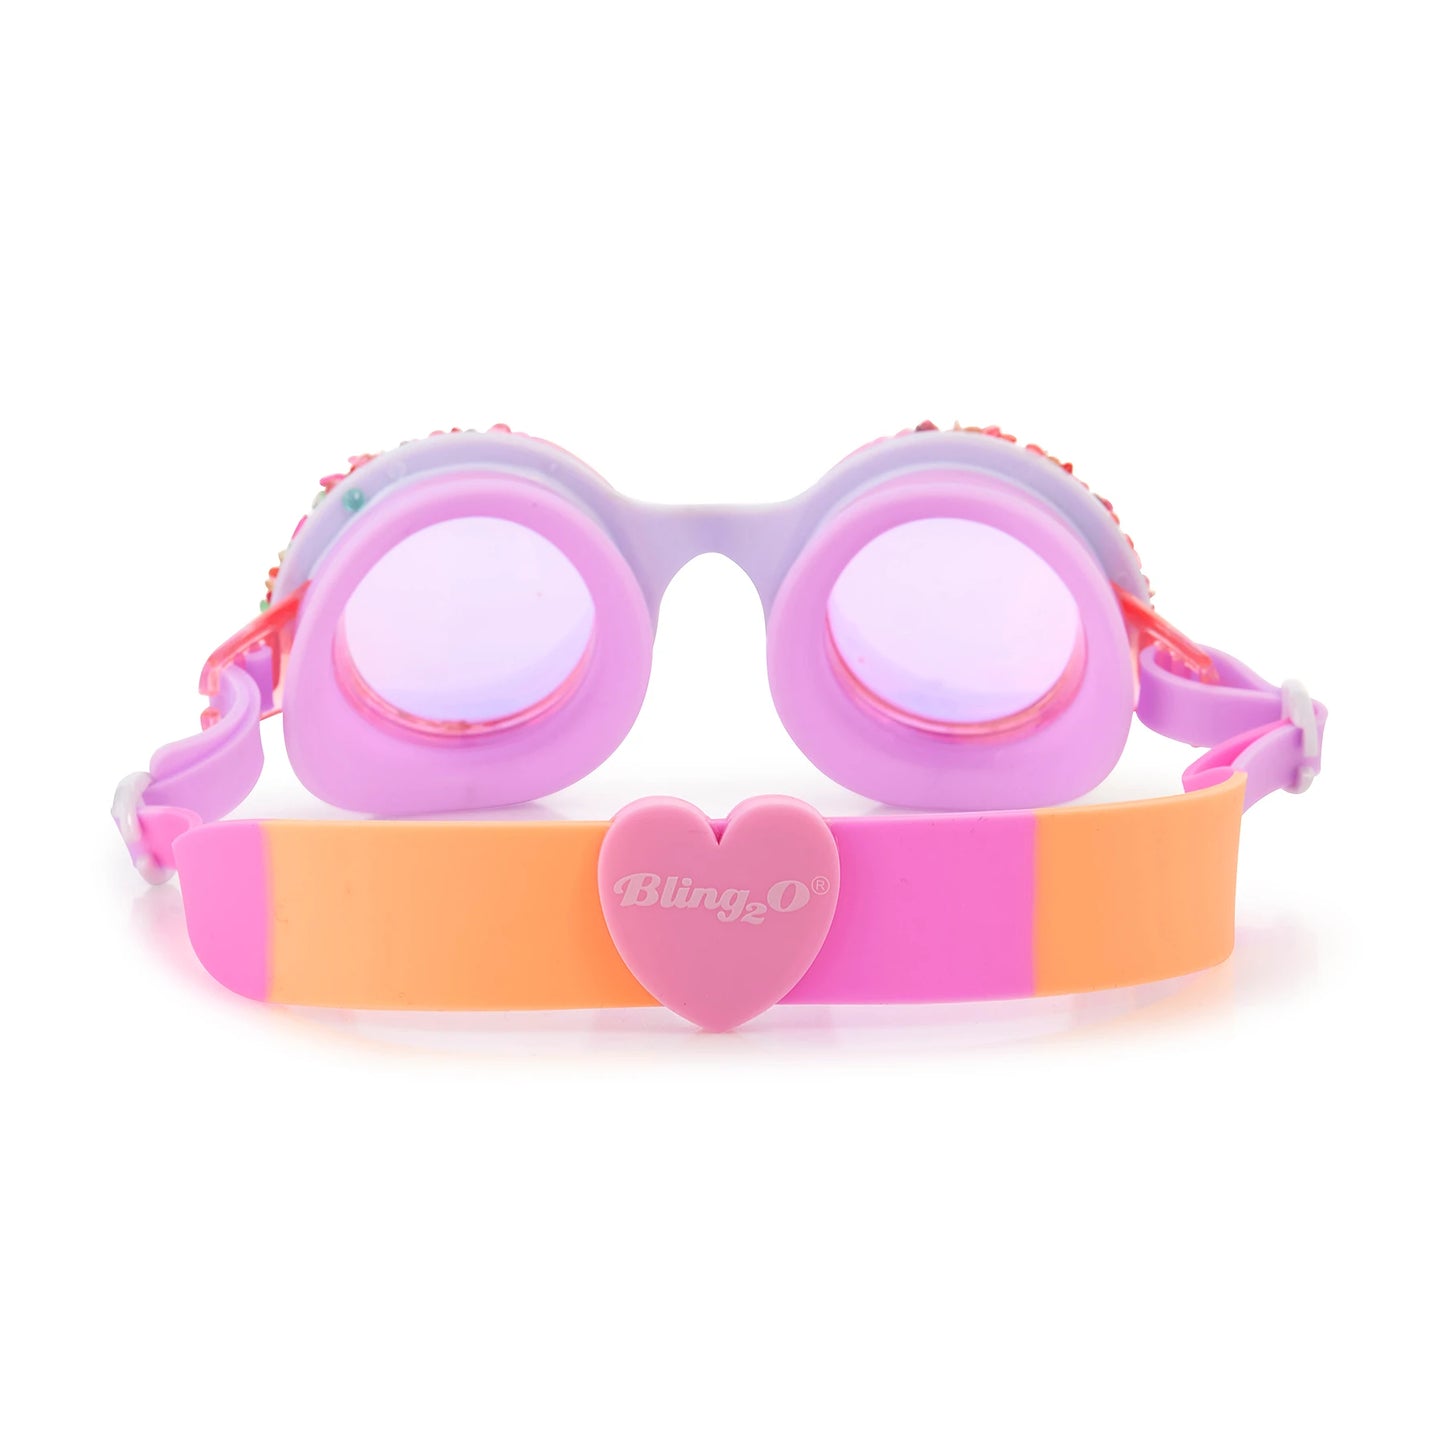 Bling2o Cupcake Swim Goggles